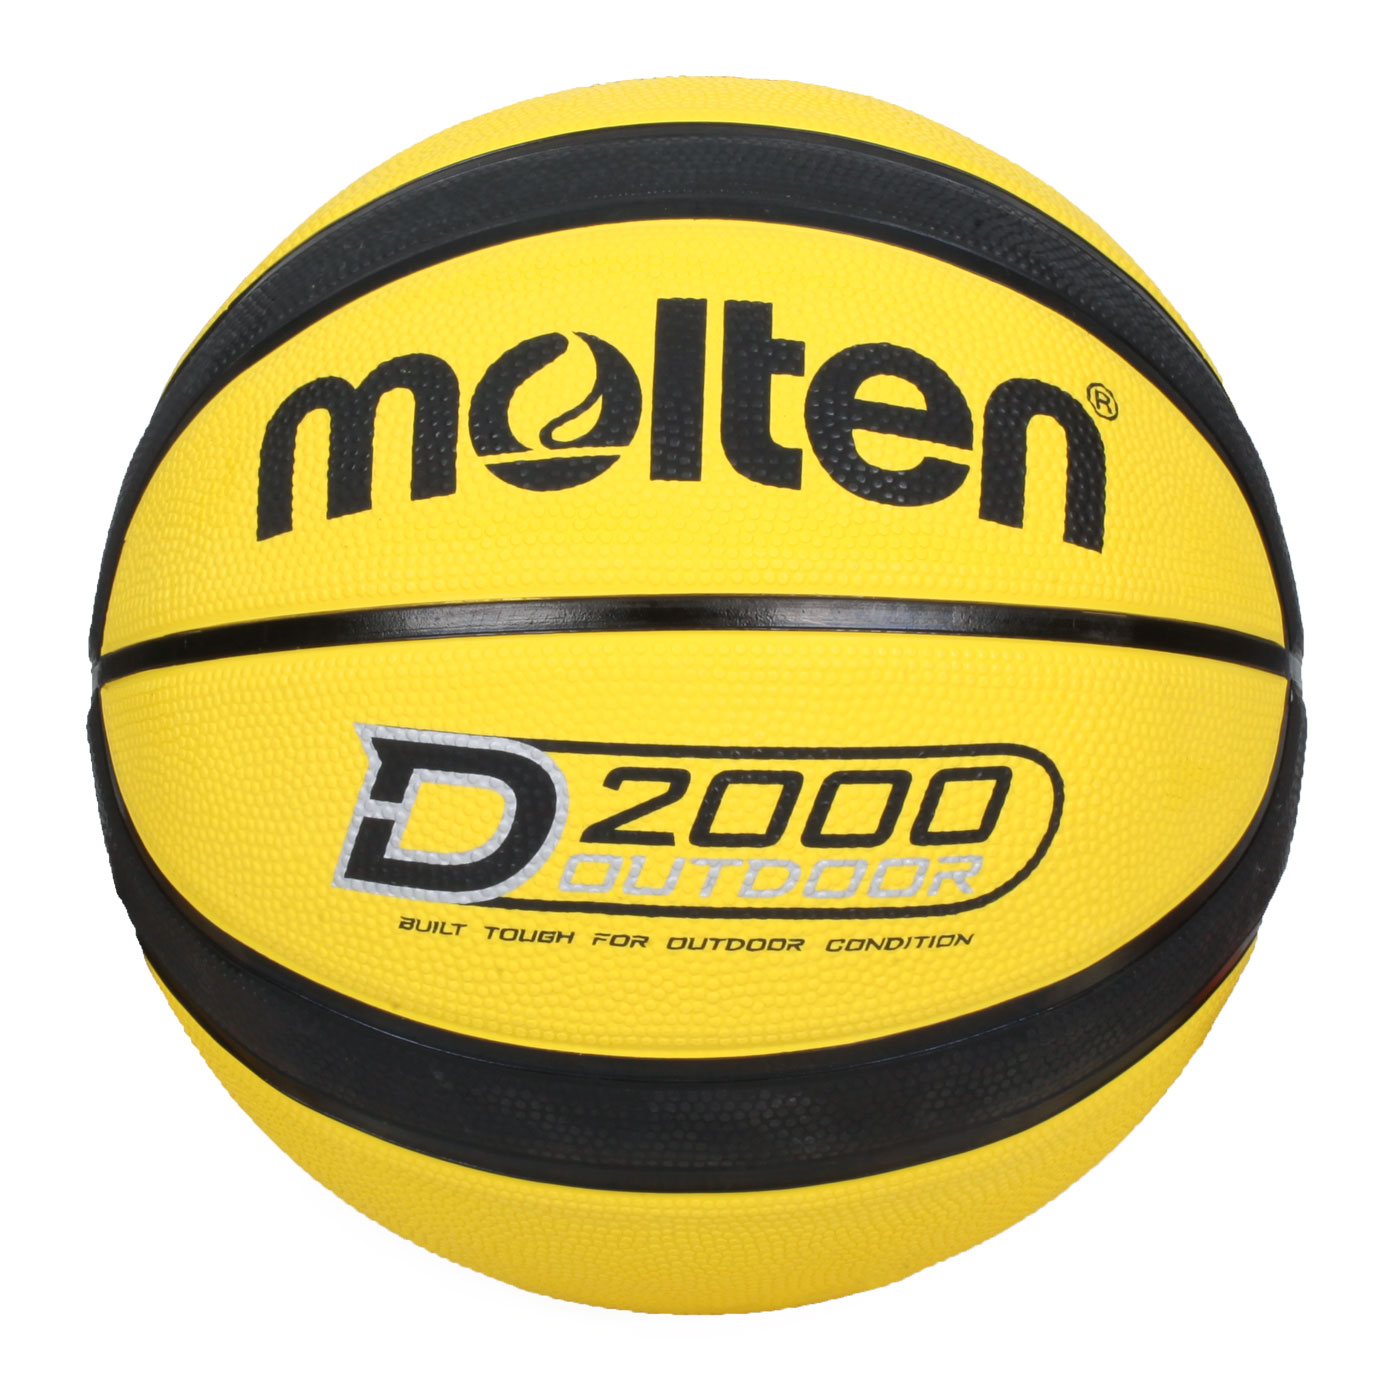 Molten 12片深溝橡膠7號籃球 B7D2005-YK - 黃黑